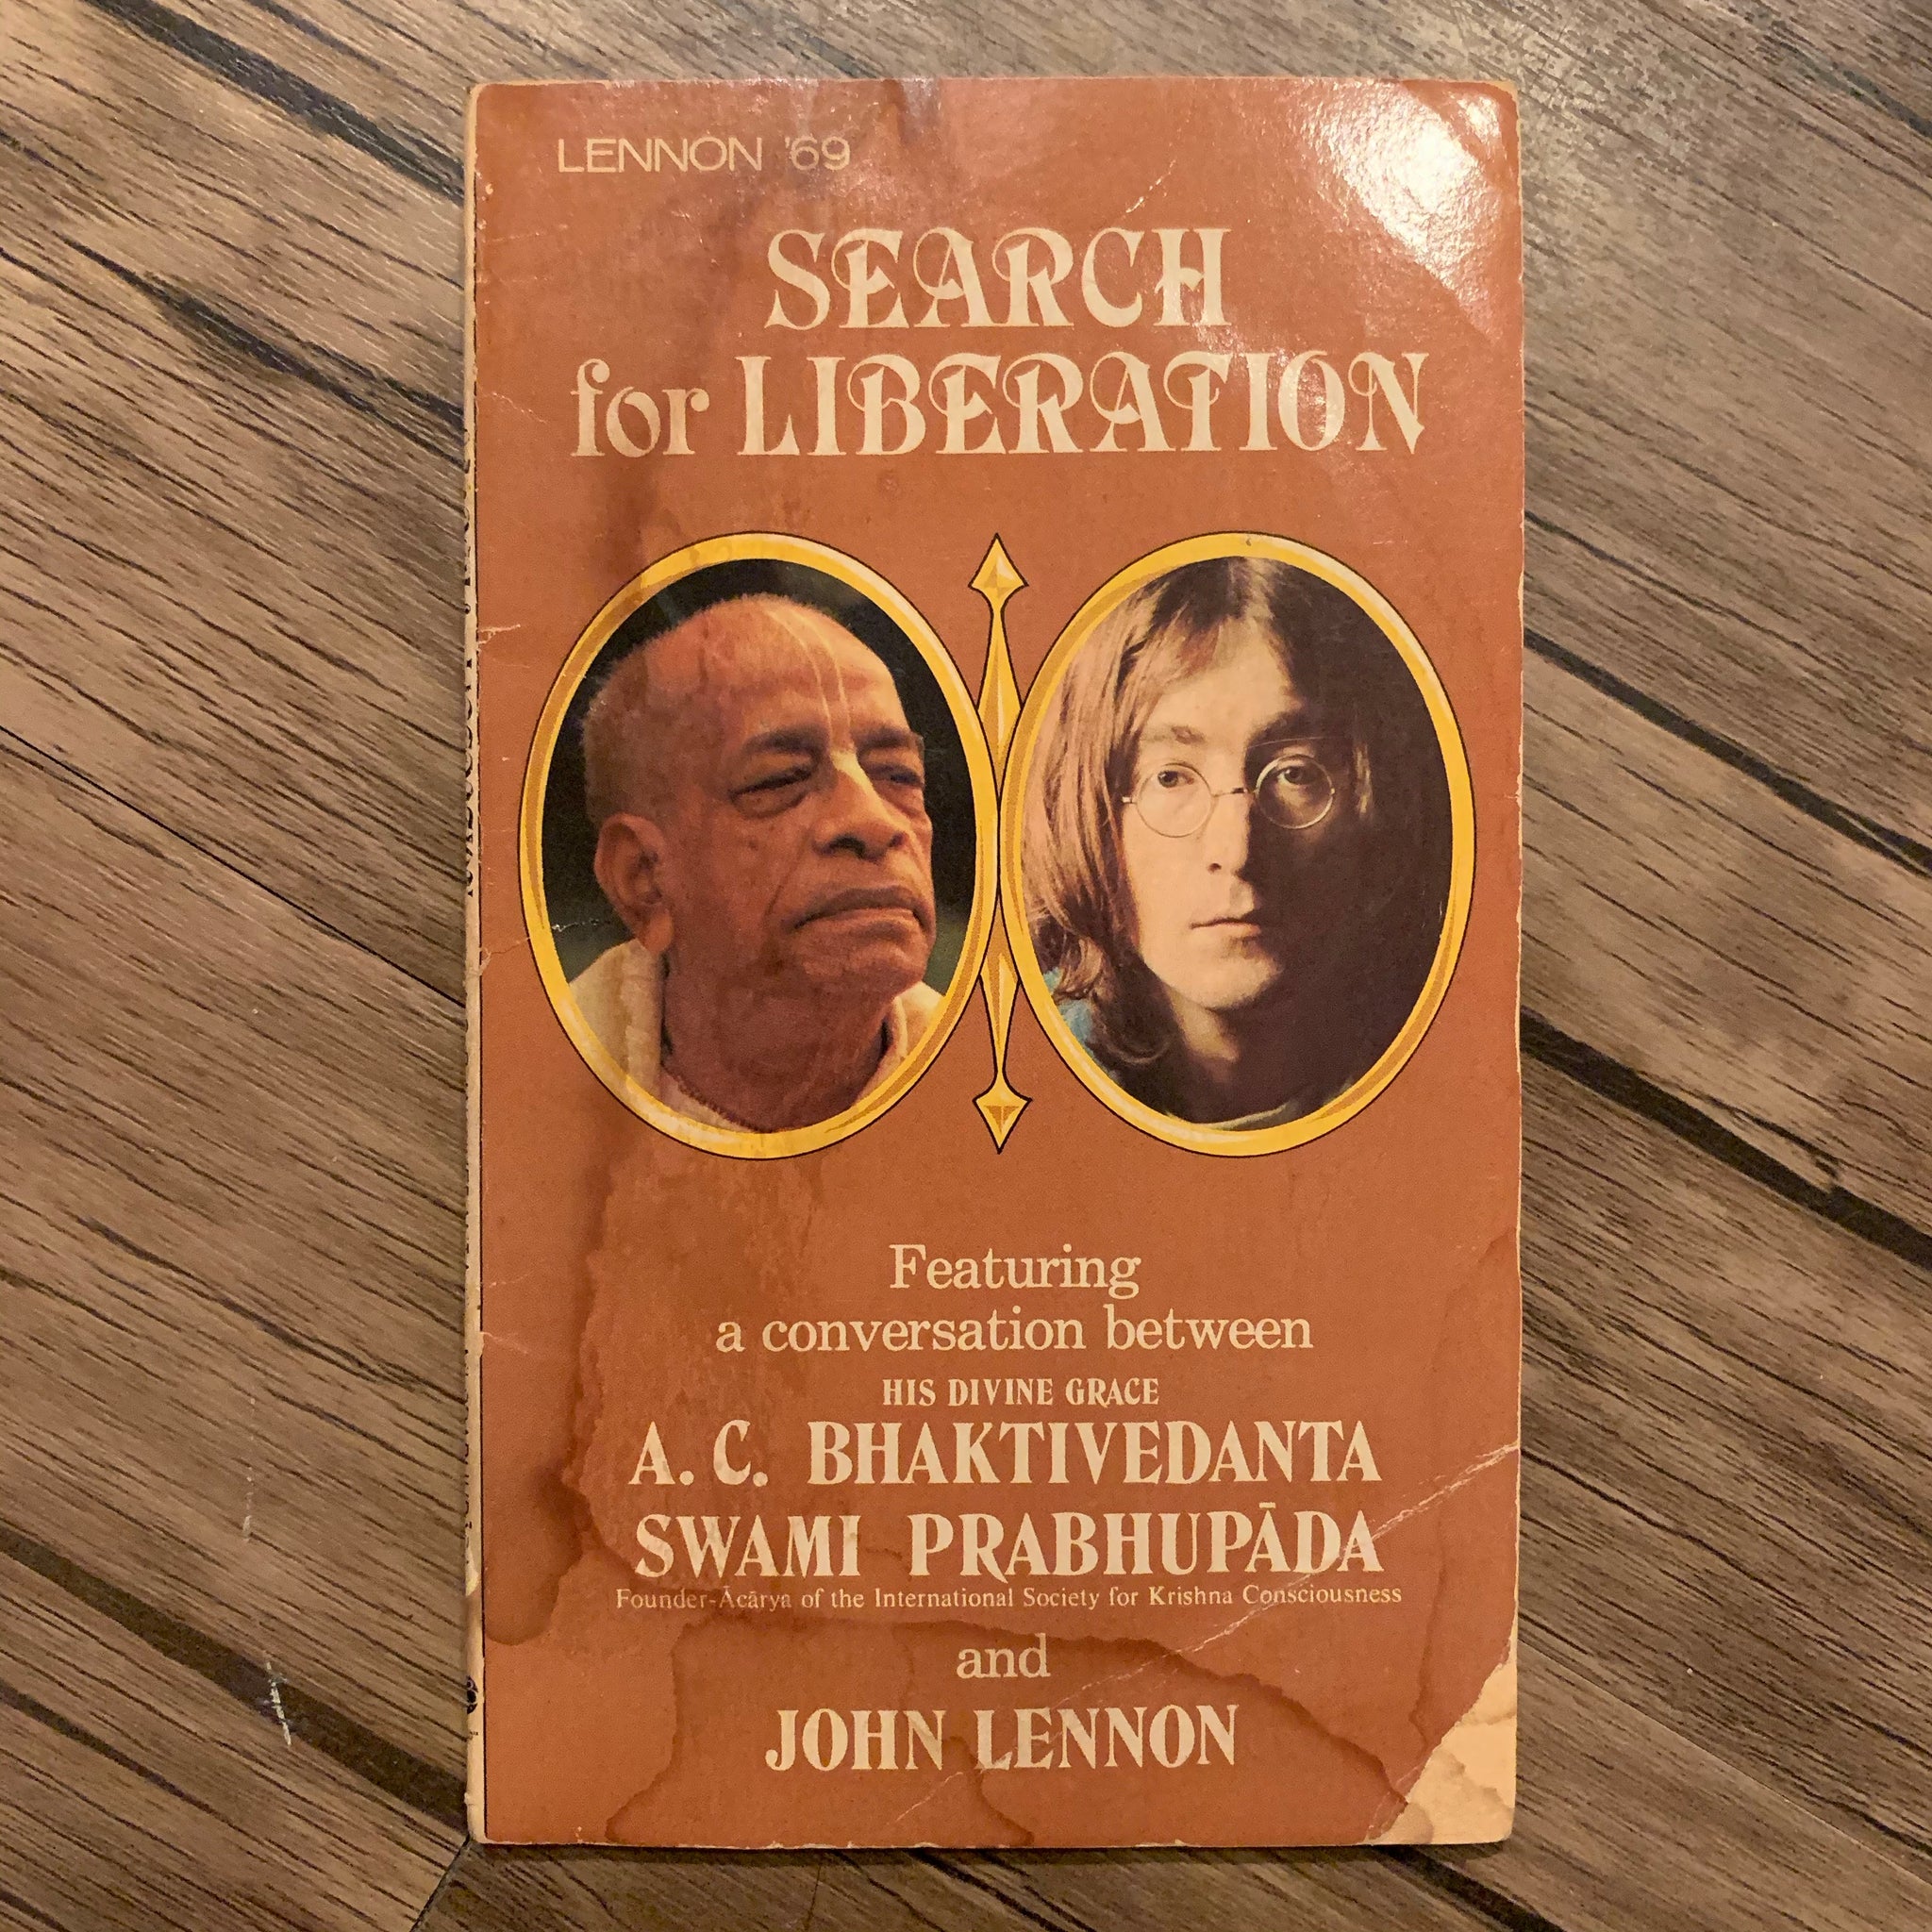 Search for Liberation conversation between A. C. Bhaktivedanta Swami Prabhupada and John Lennon